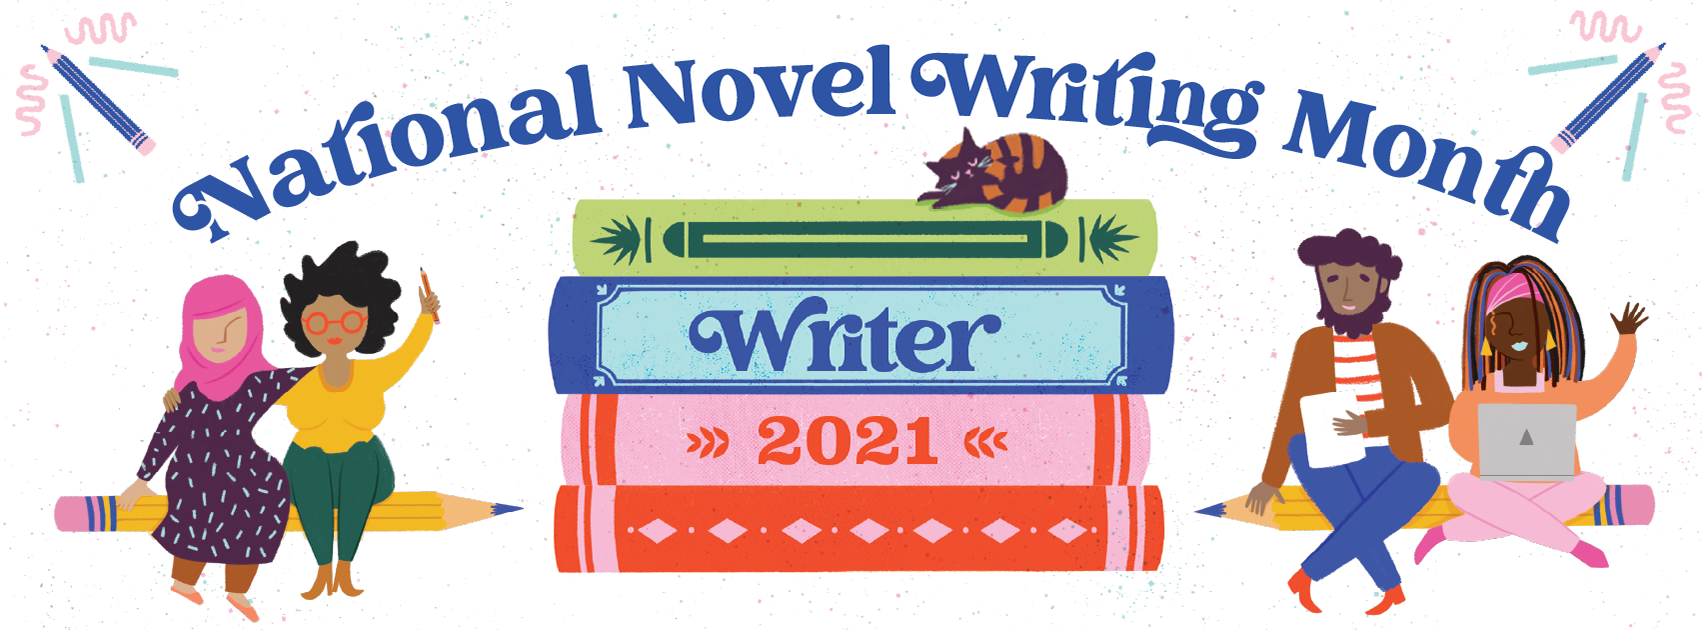 novel writing month 2021